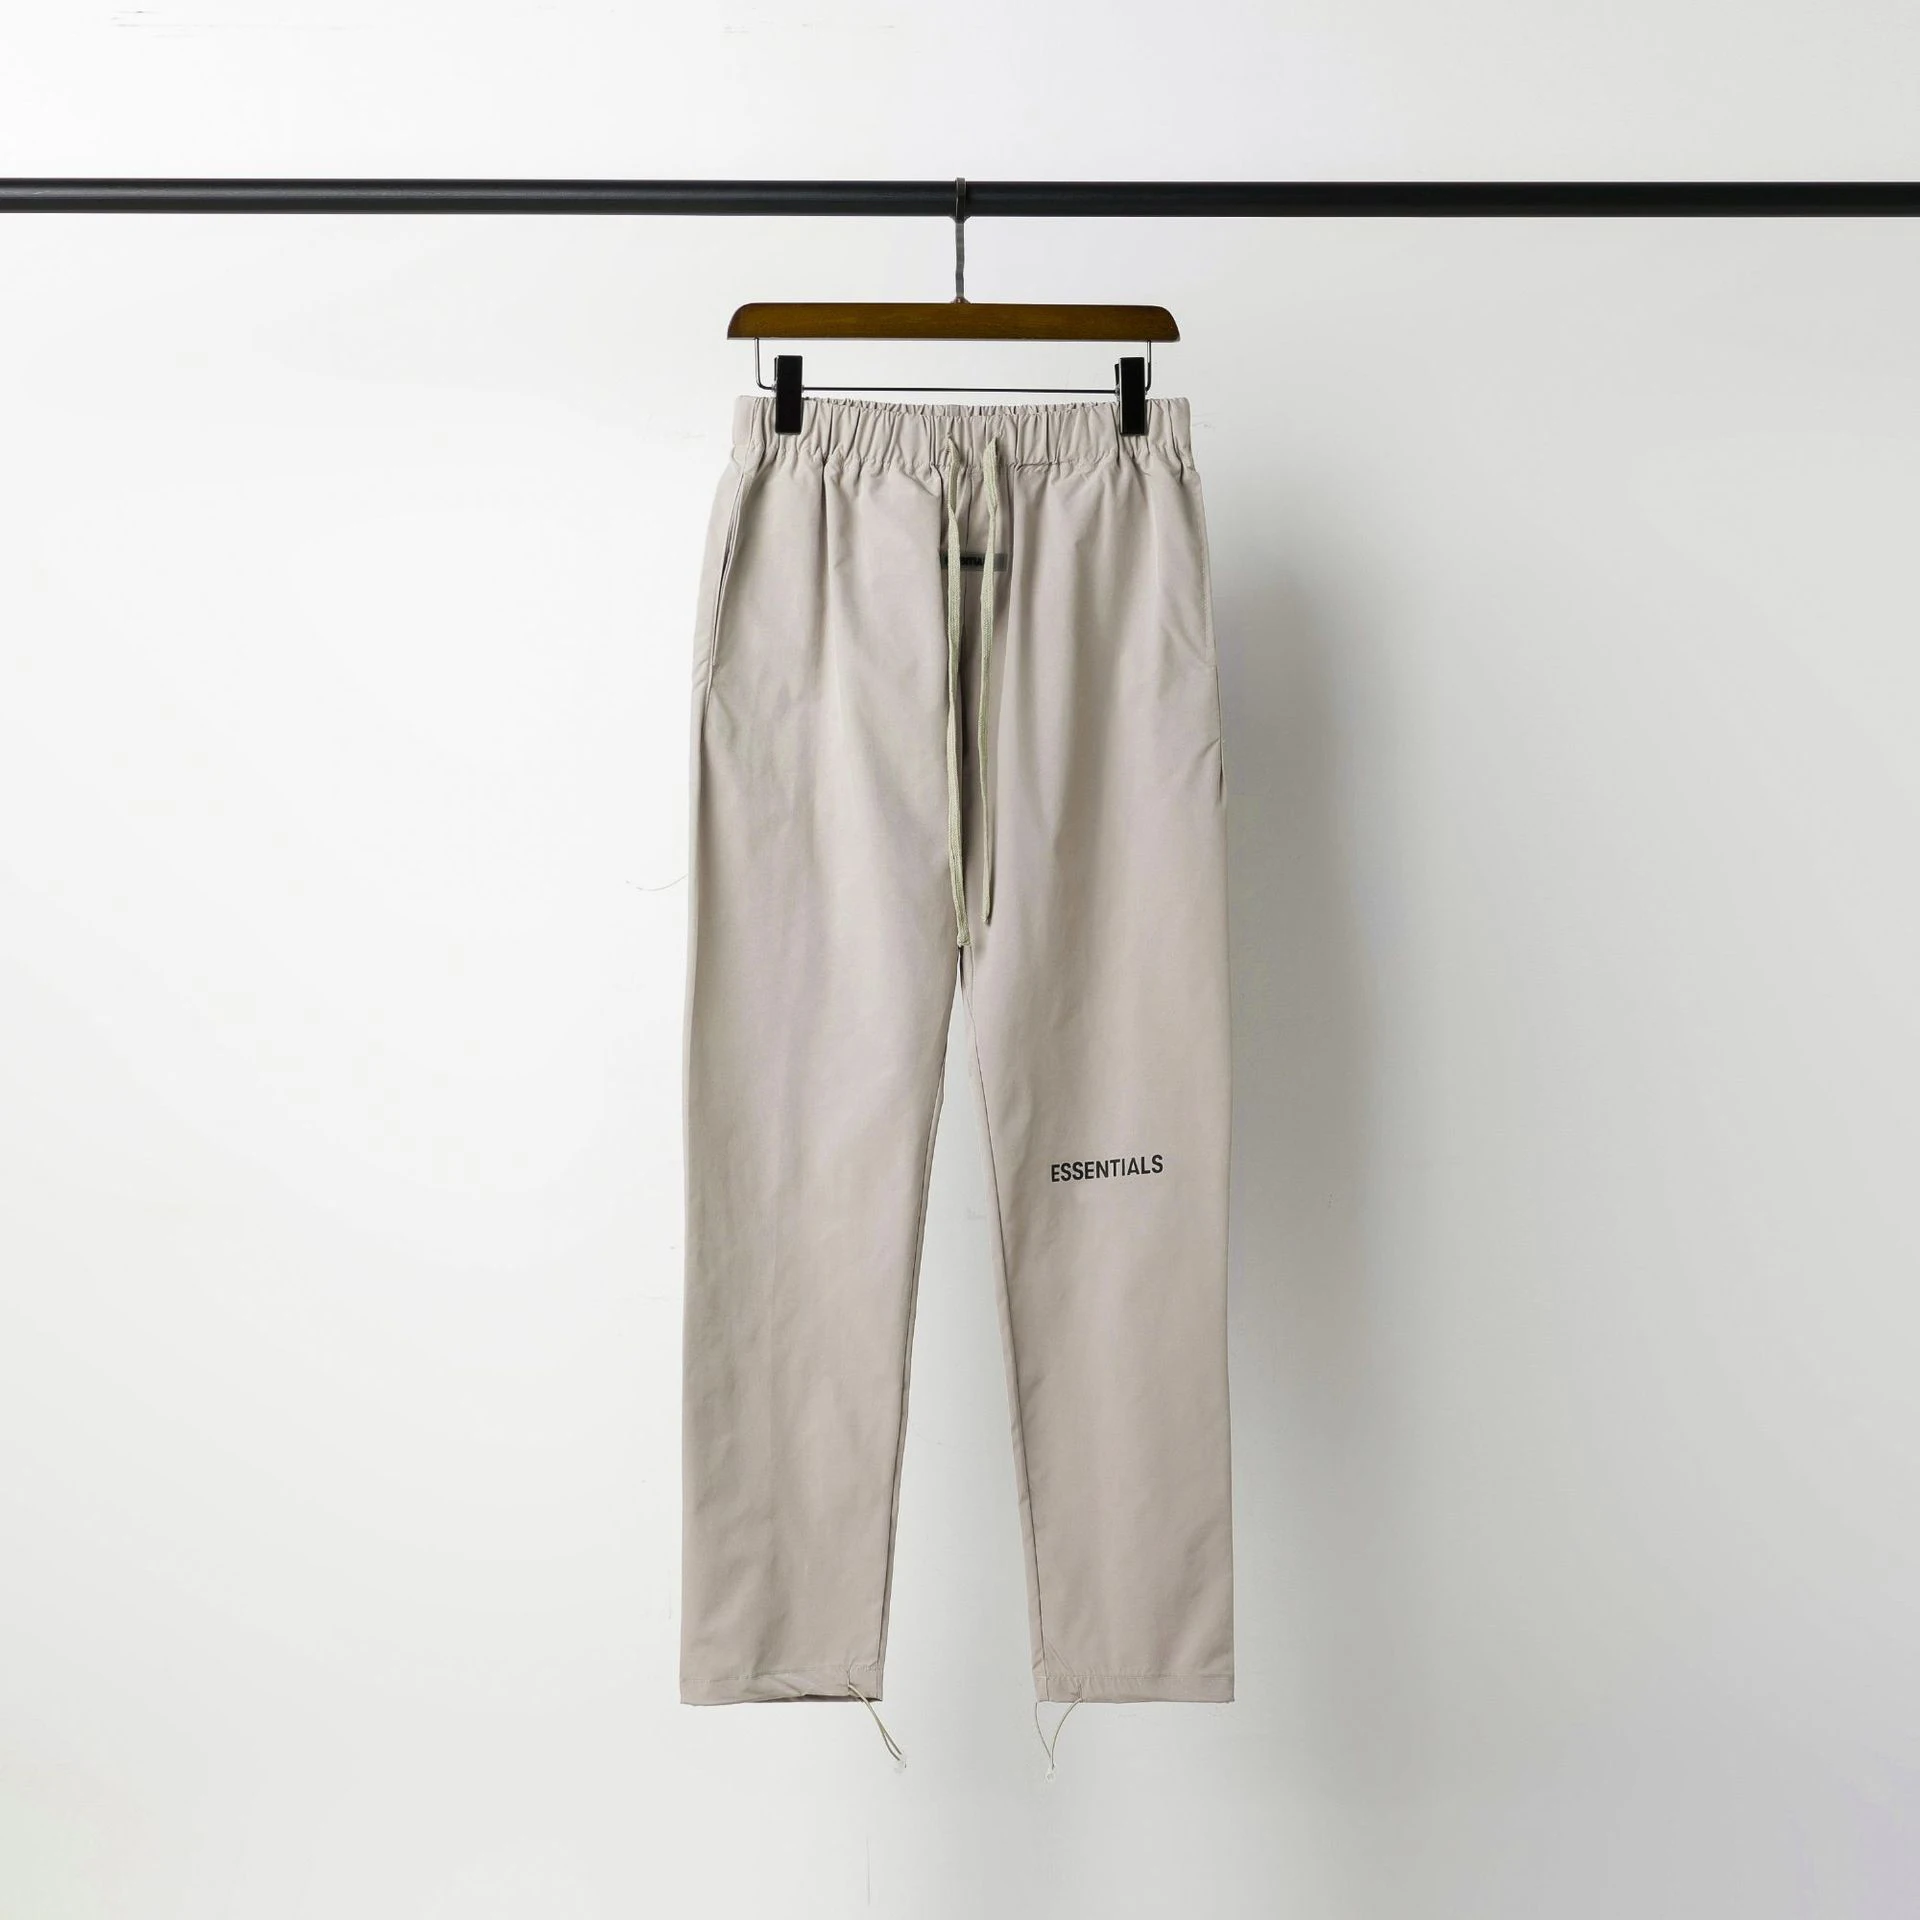 Pants Frivolous Ventilation Hip Hop Streetwear Jogging Running Essentials Trousers for Men 100% 1:1 Woman Sports Oversize Casual